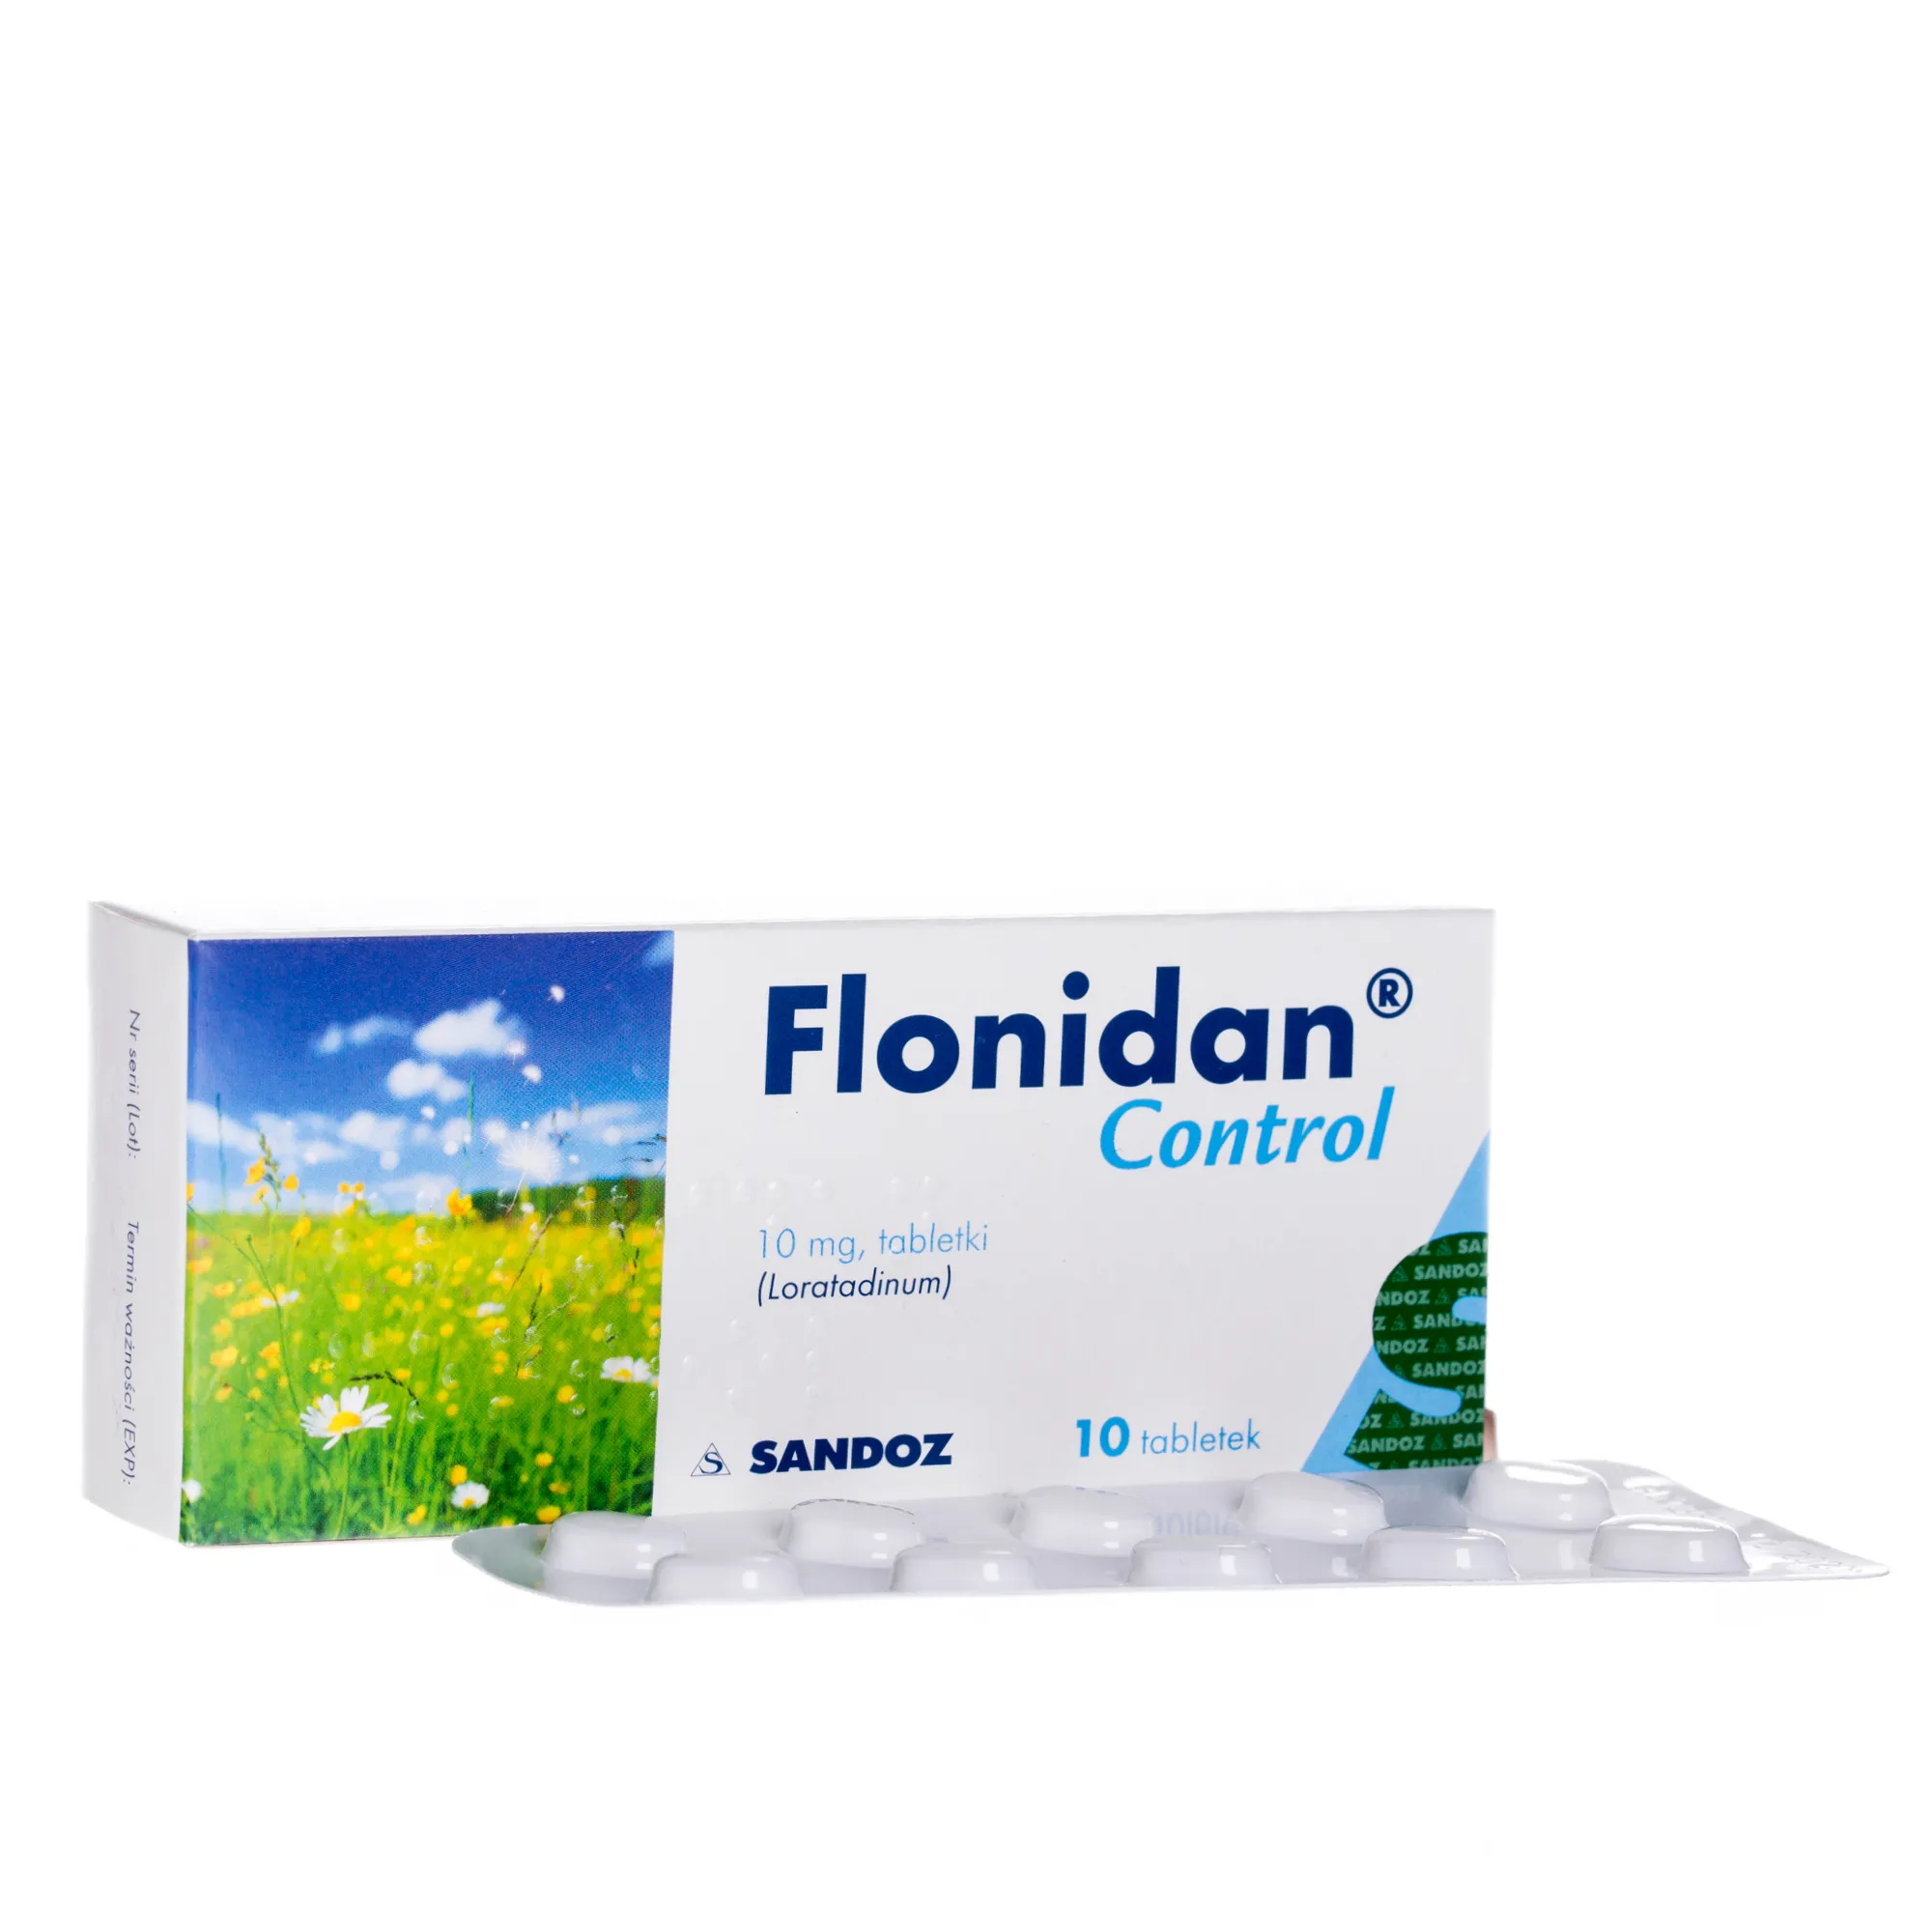 Flonidan Control, 10 mg, 10 tabletek